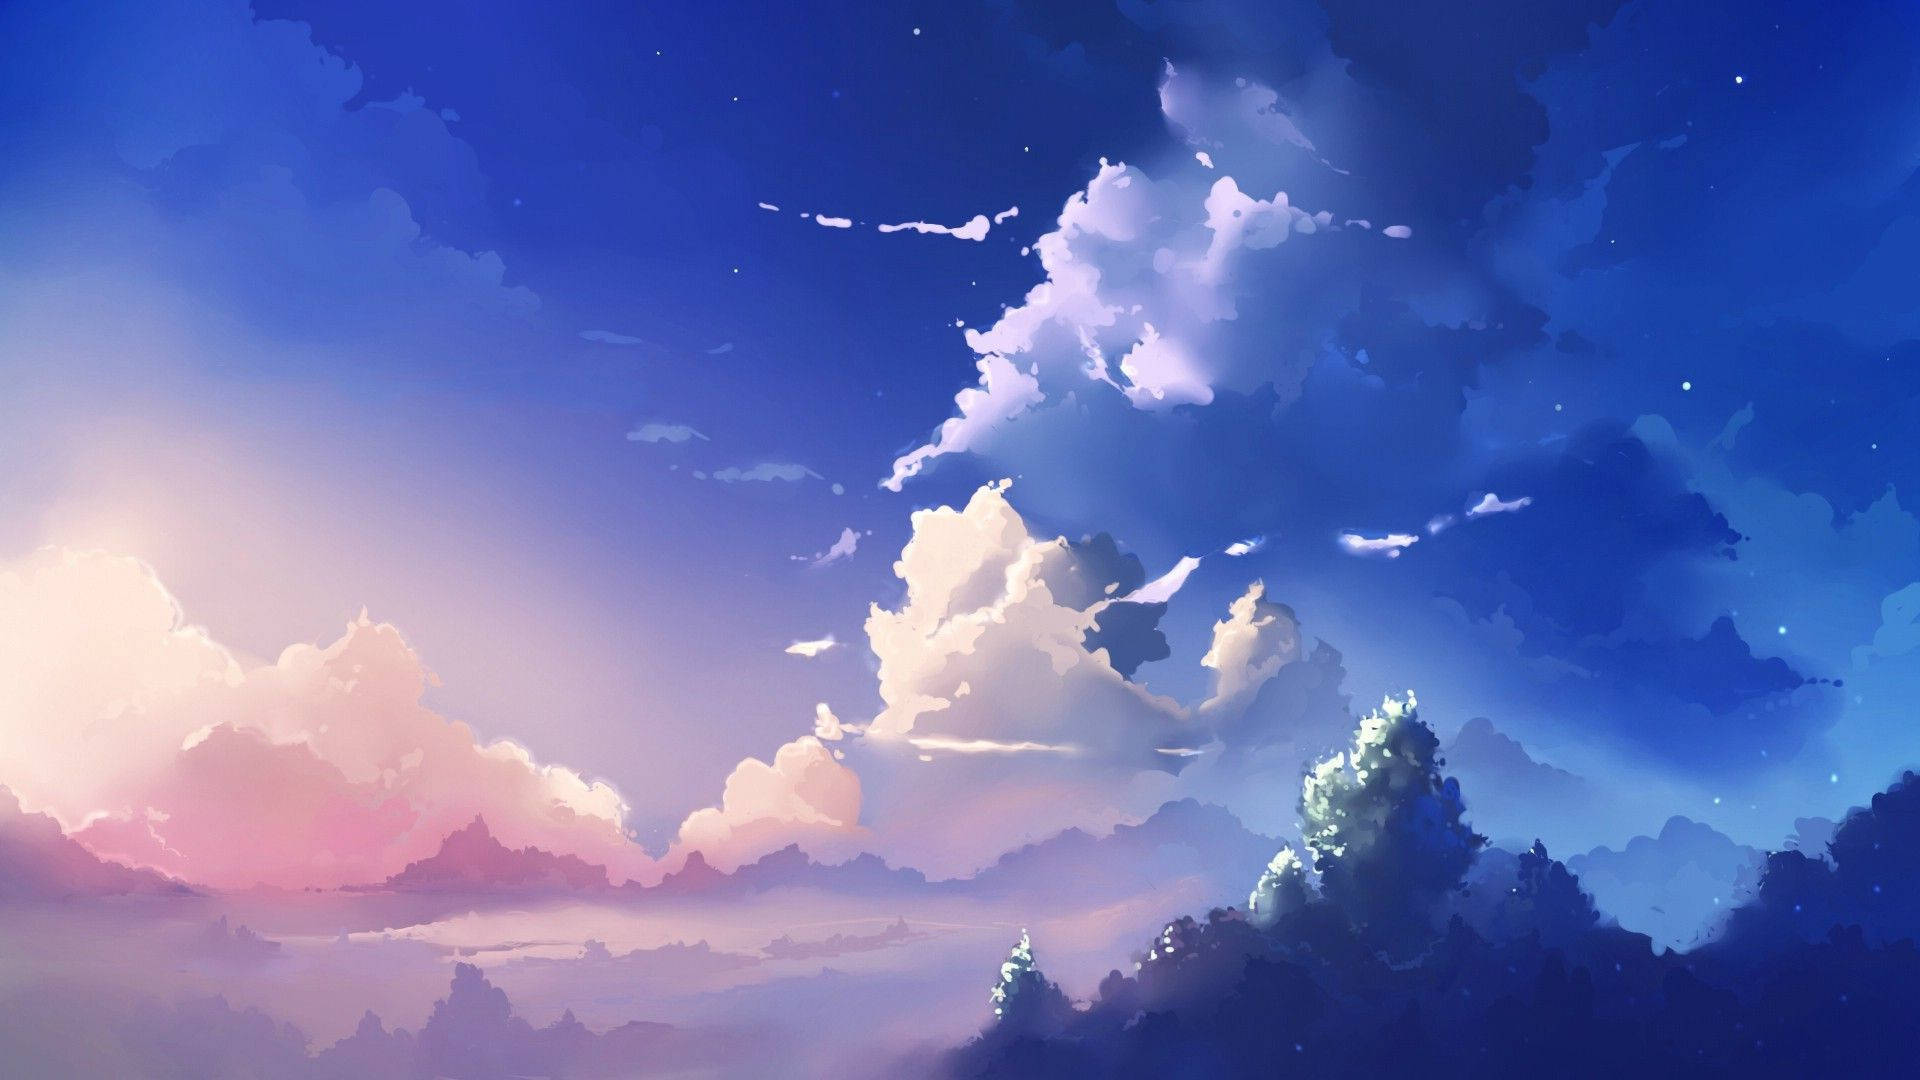 Sky anime background